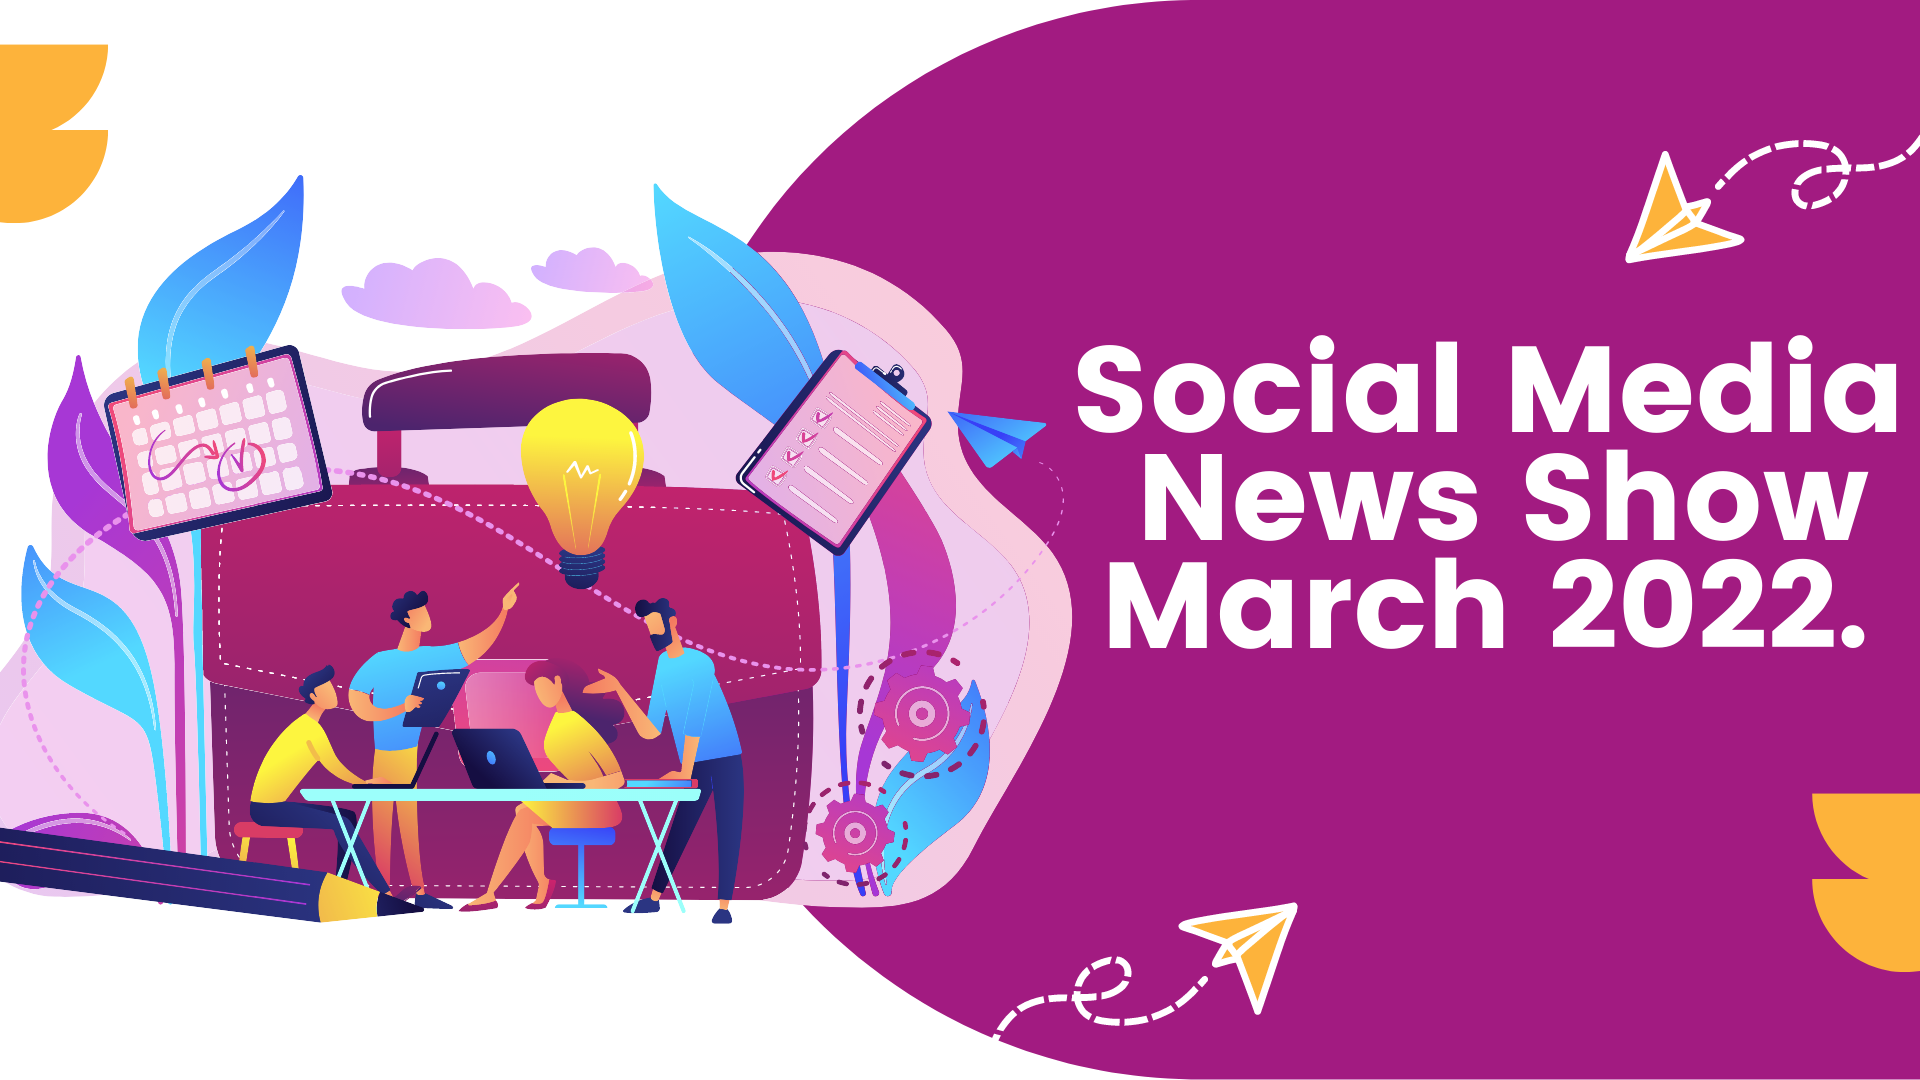 Social Media News Show March 2022